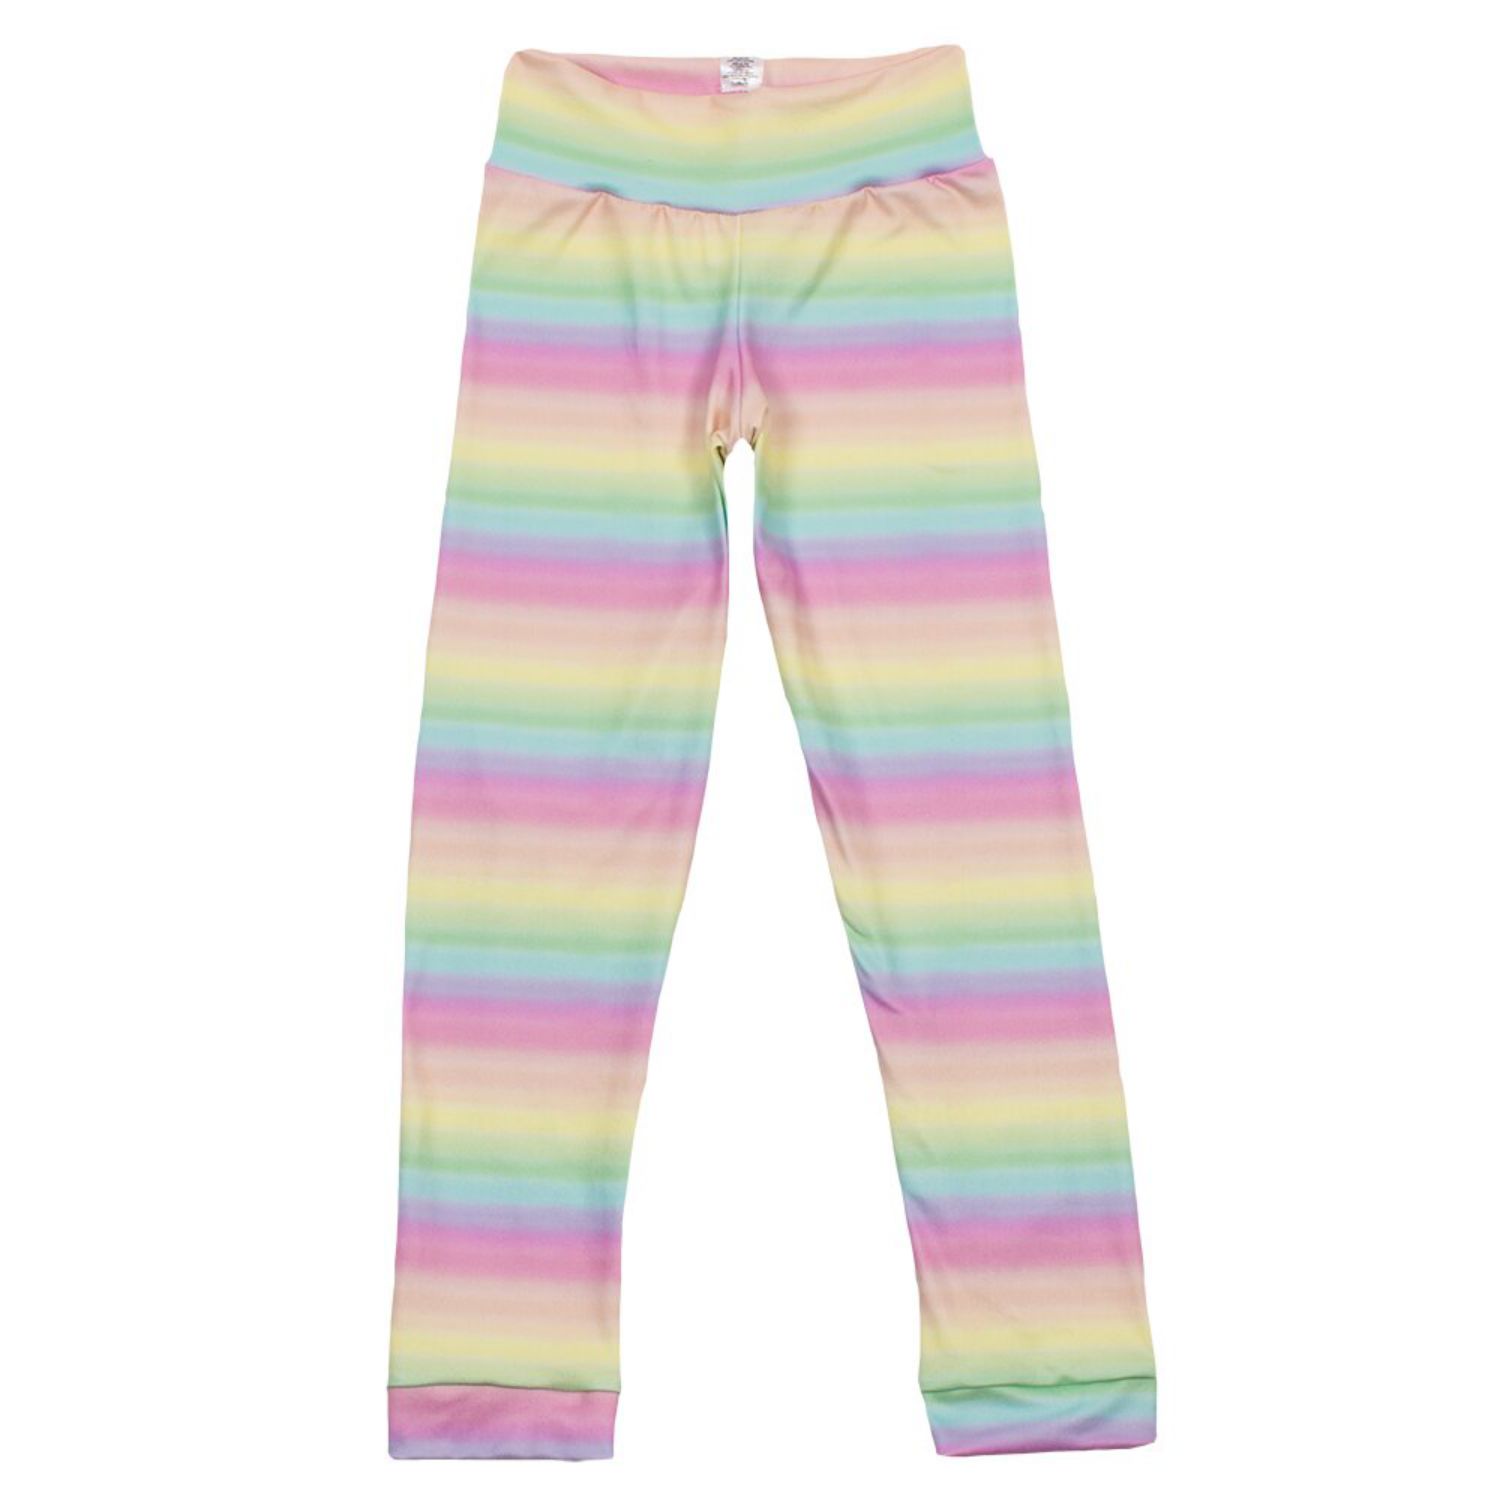 Bumblito Leggings Pattern: Rainbow Sherbet / Size: L (92 - 104)